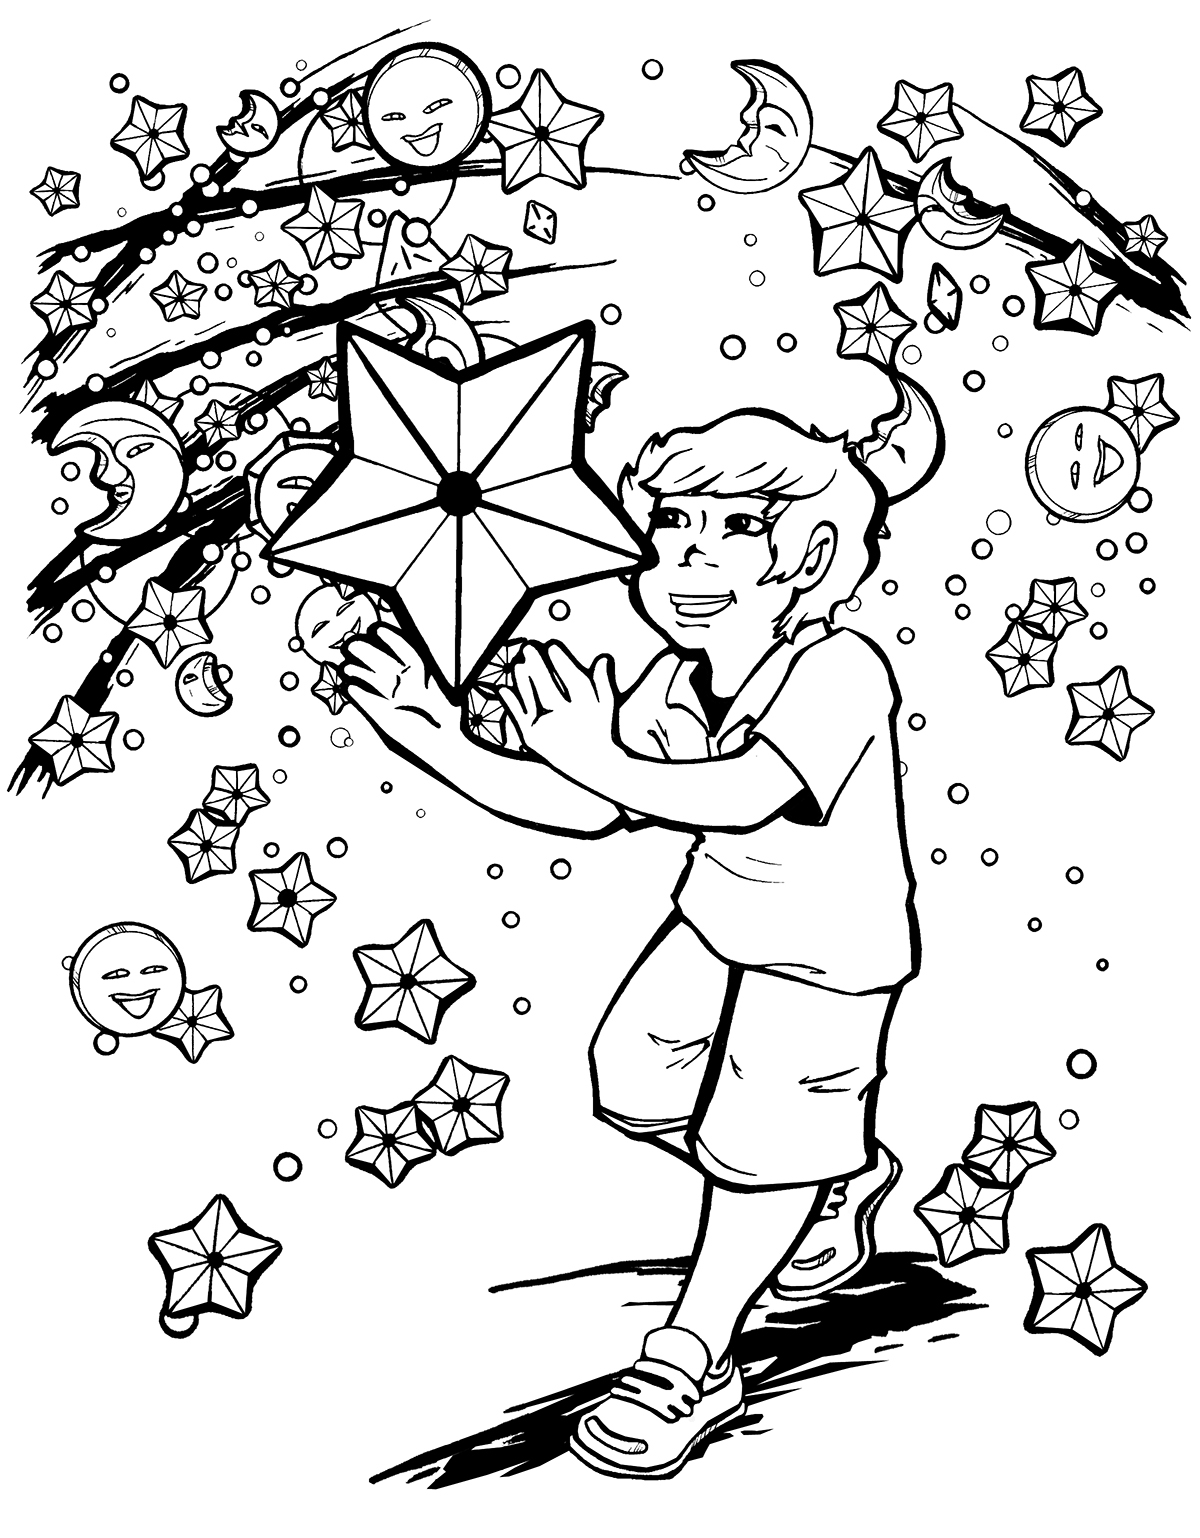 mobot Missouri Botanical Garden Chinese Lantern Festival coloring book children's illustration